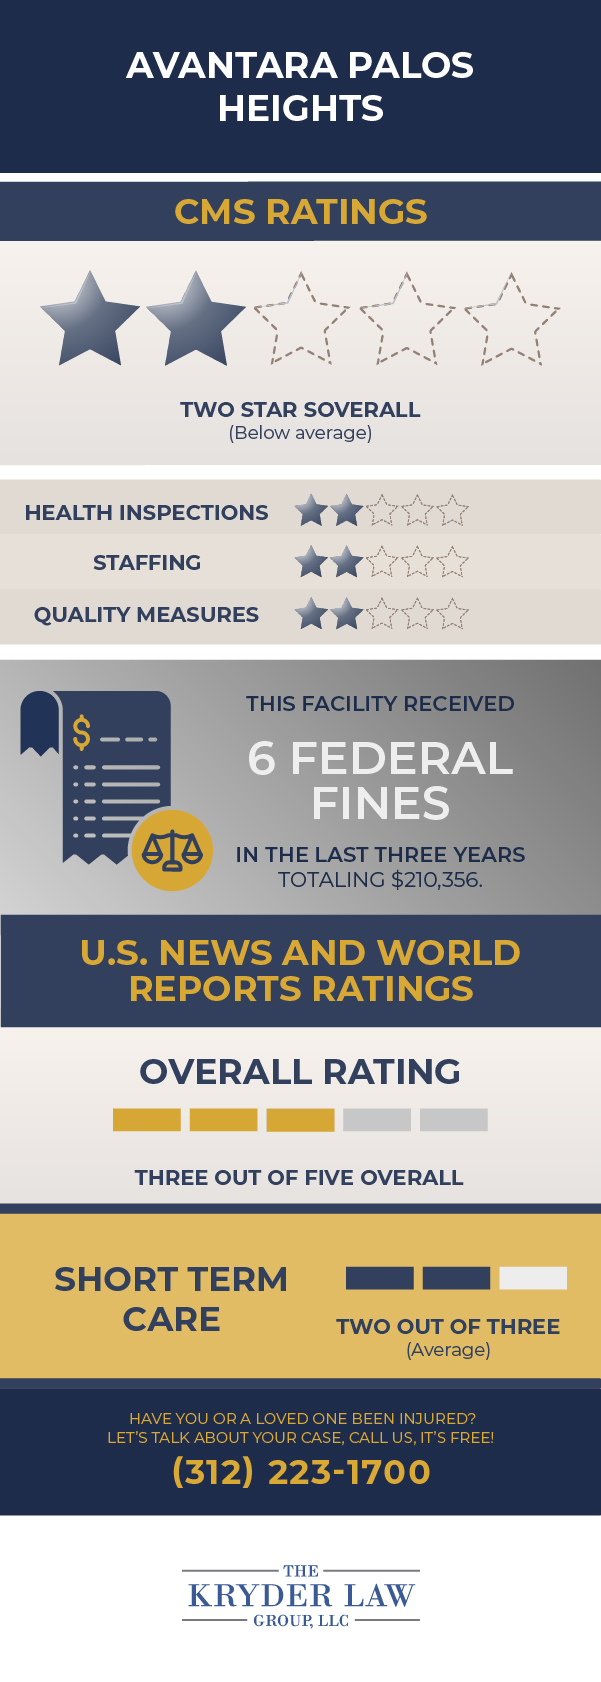 Avantara Palos Heights CMS Ratings and U.S. News & World Report Ratings